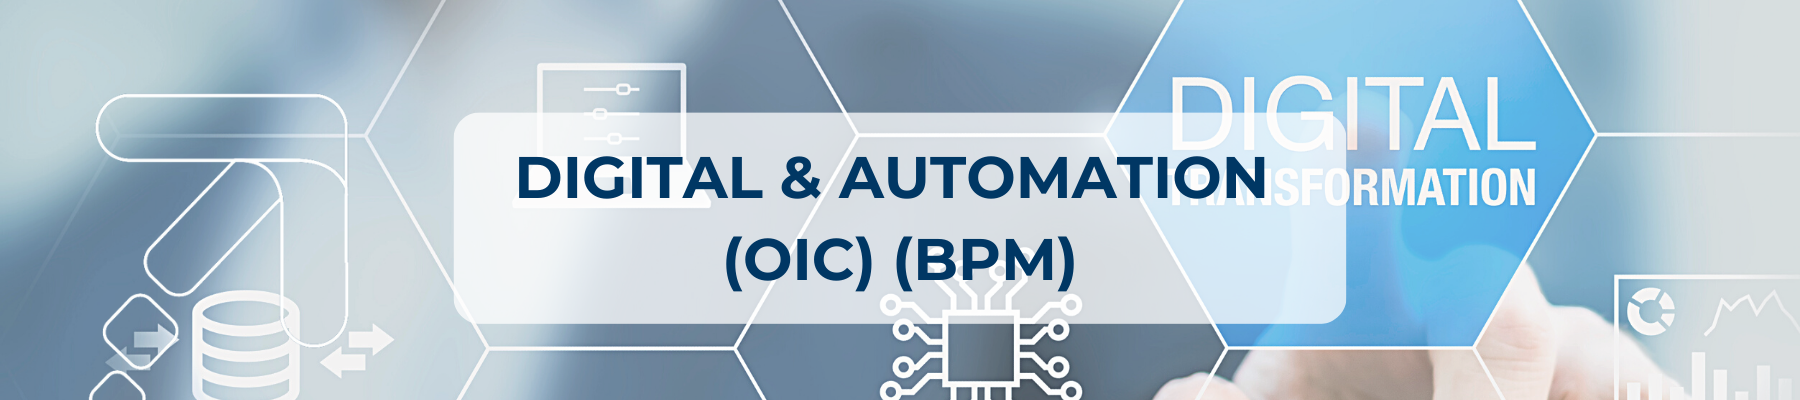 Cabecera Blog Digital & Automation (OIC)(BPM)